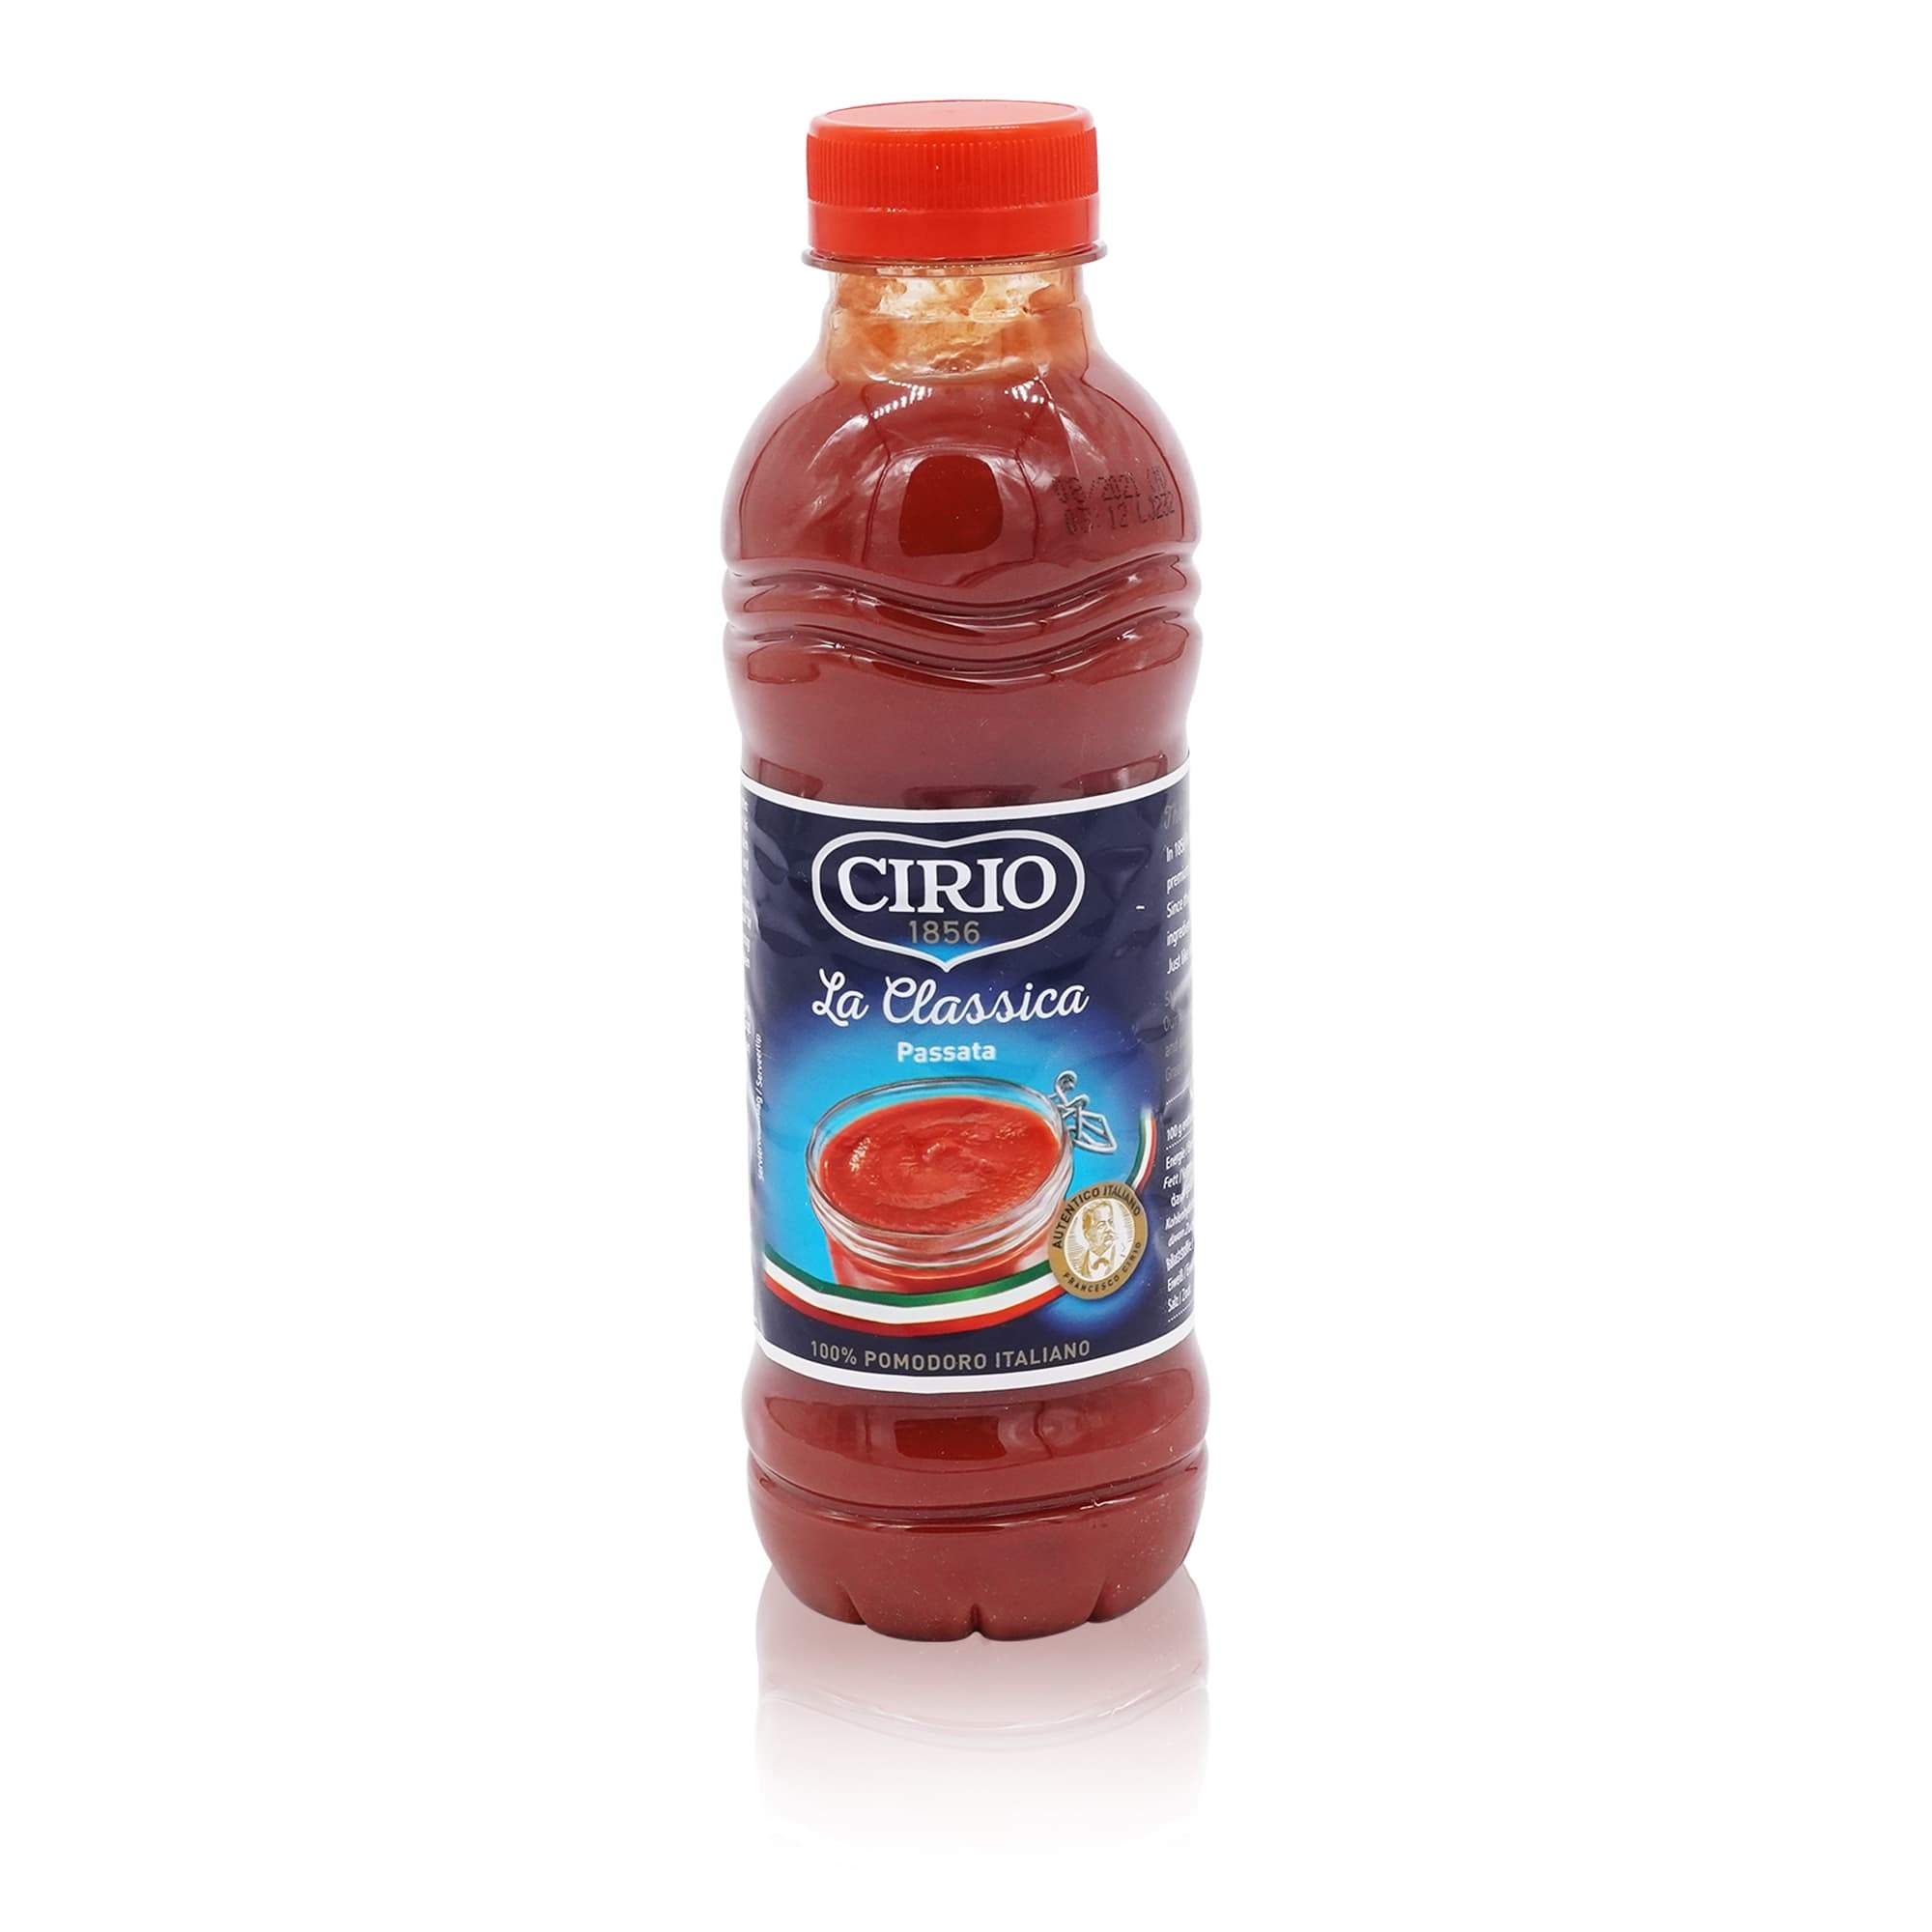 CIRIO Passata di pomodoro Classico – Passierte Tomaten PET-Flasche - 0,54kg - italienisch-einkaufen.de